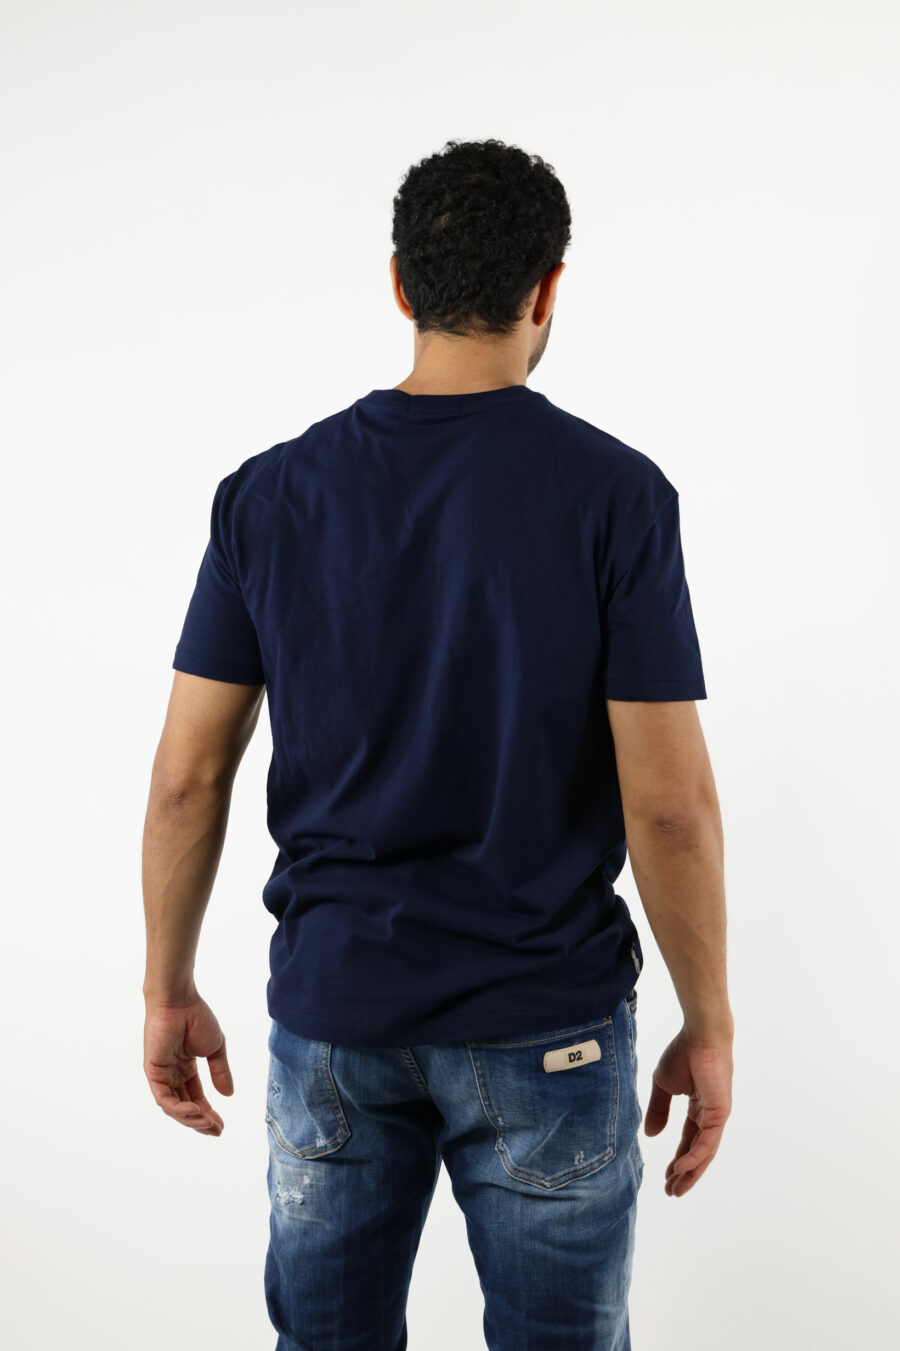 Dunkelblaues T-Shirt mit weißem "Polo"-Maxilogo - 111237